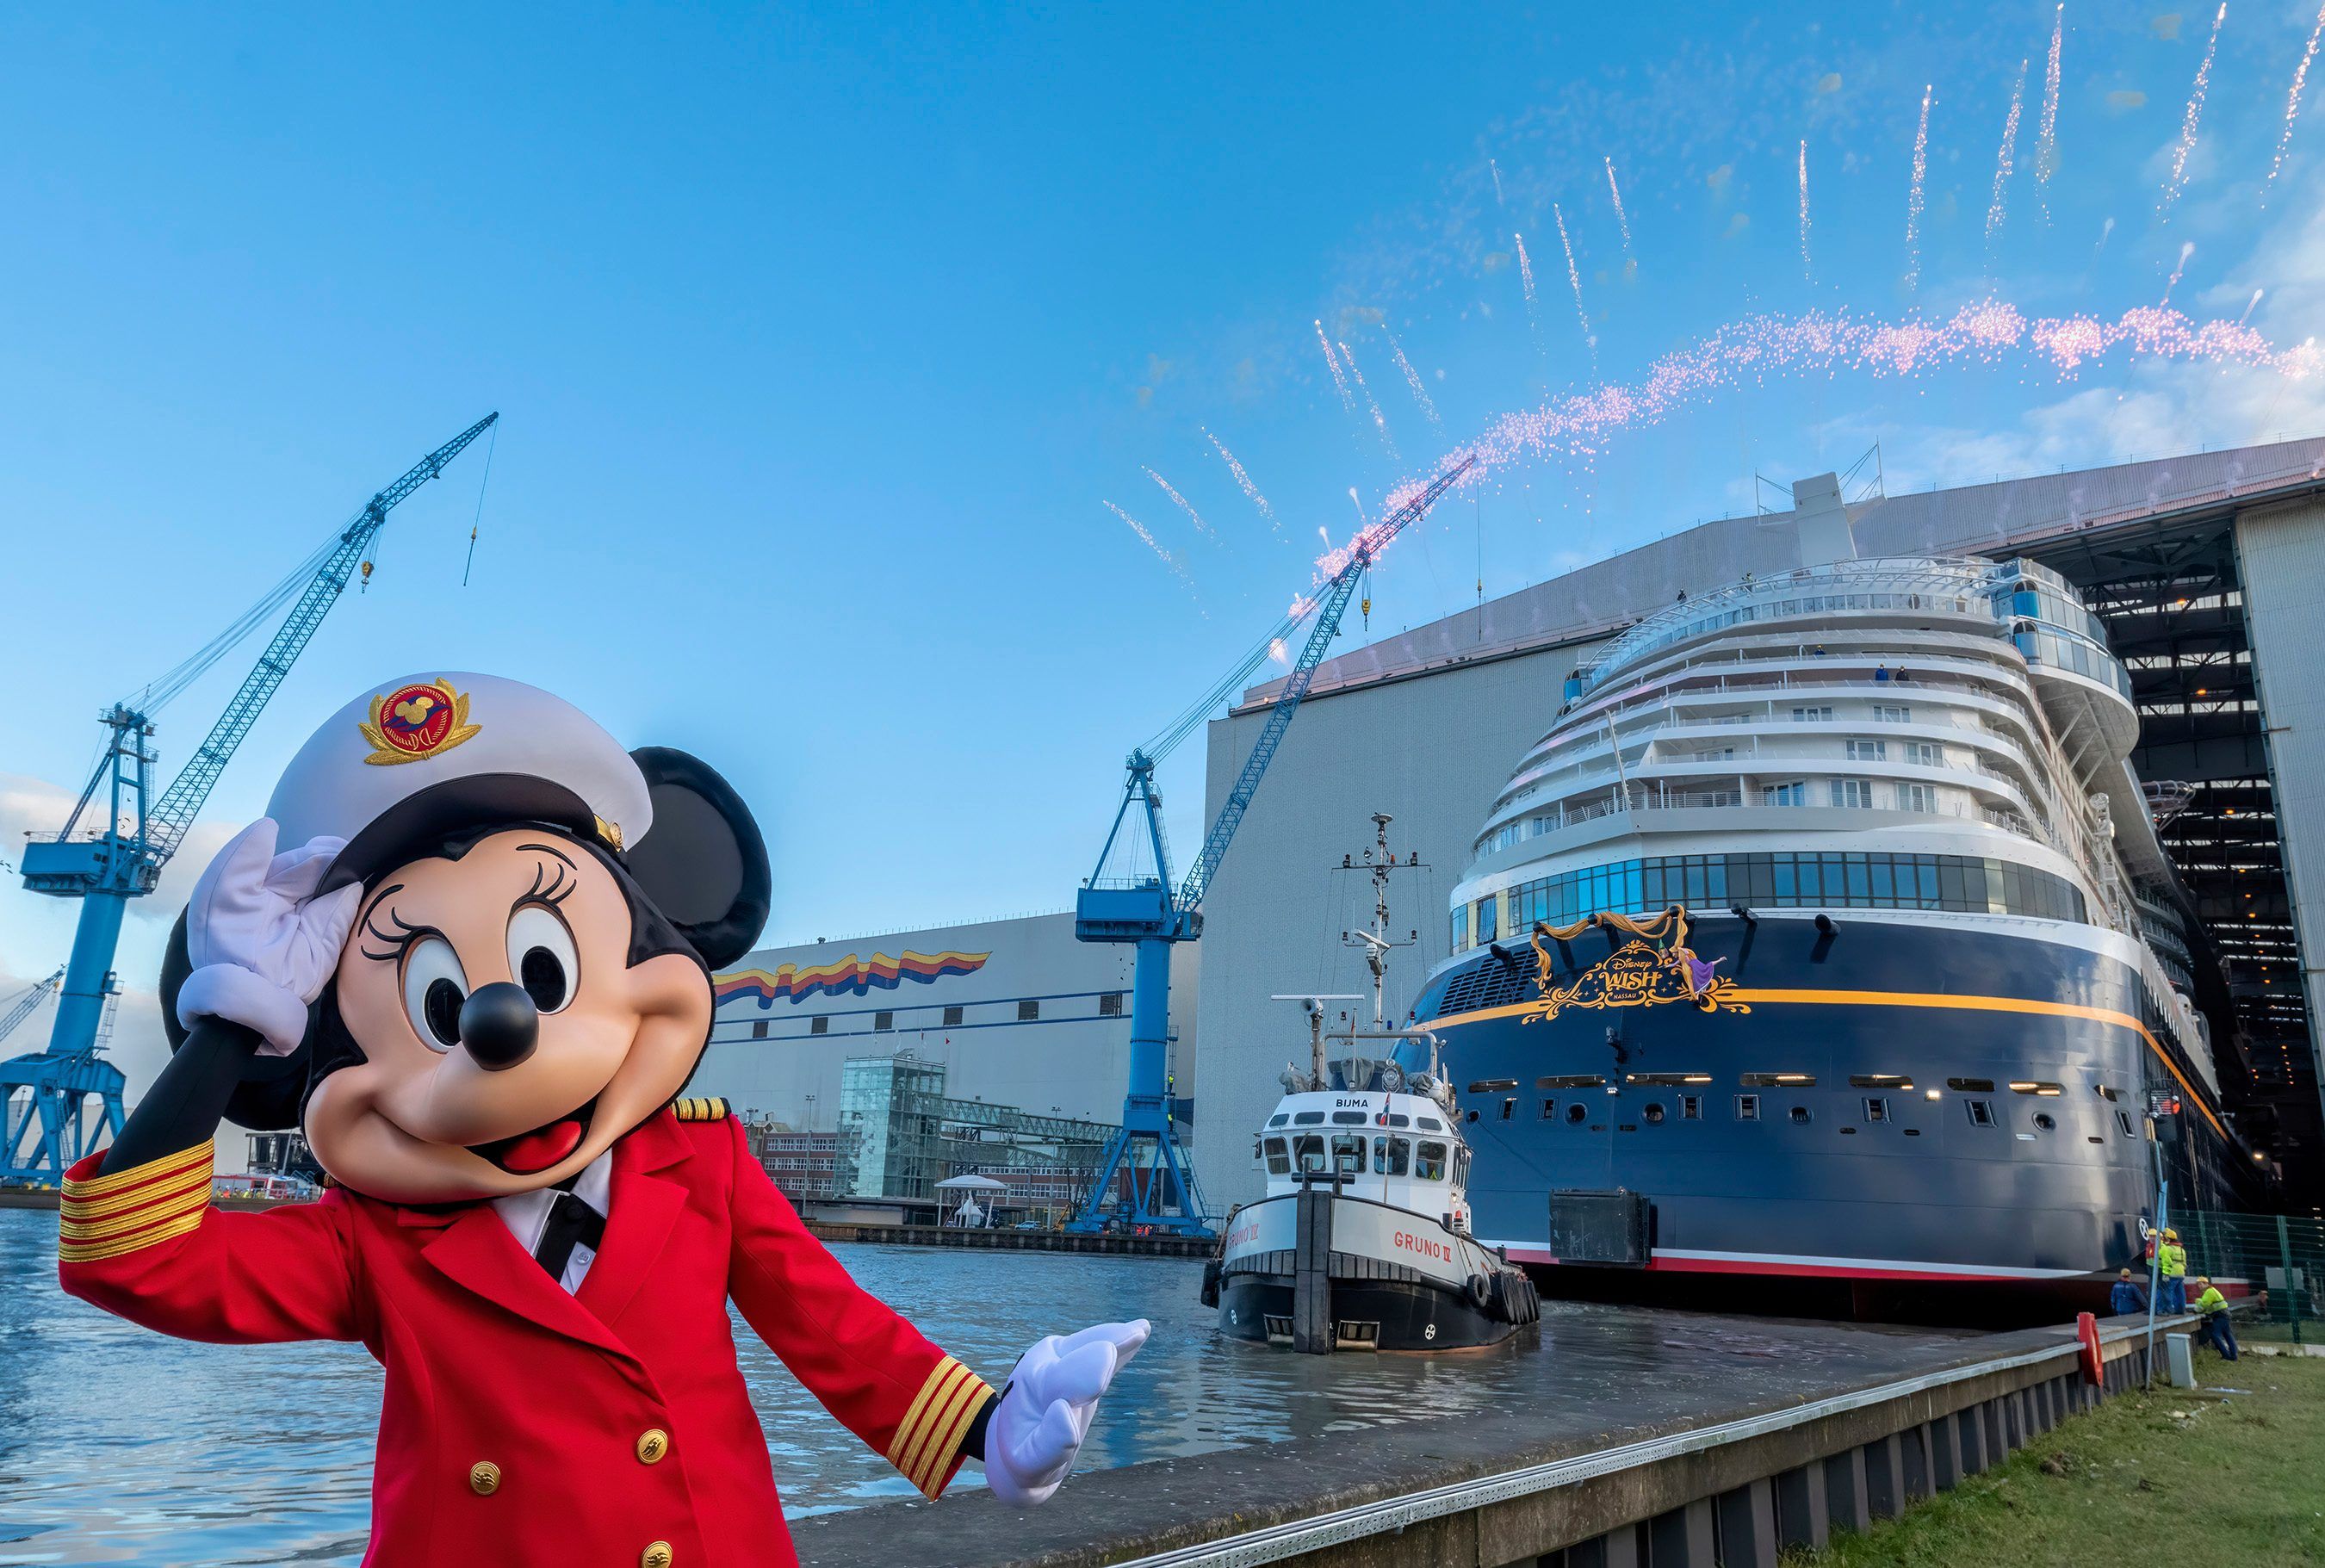 Disney Wish Cruise 2022 - Booking, Itinerary, Price, Photos